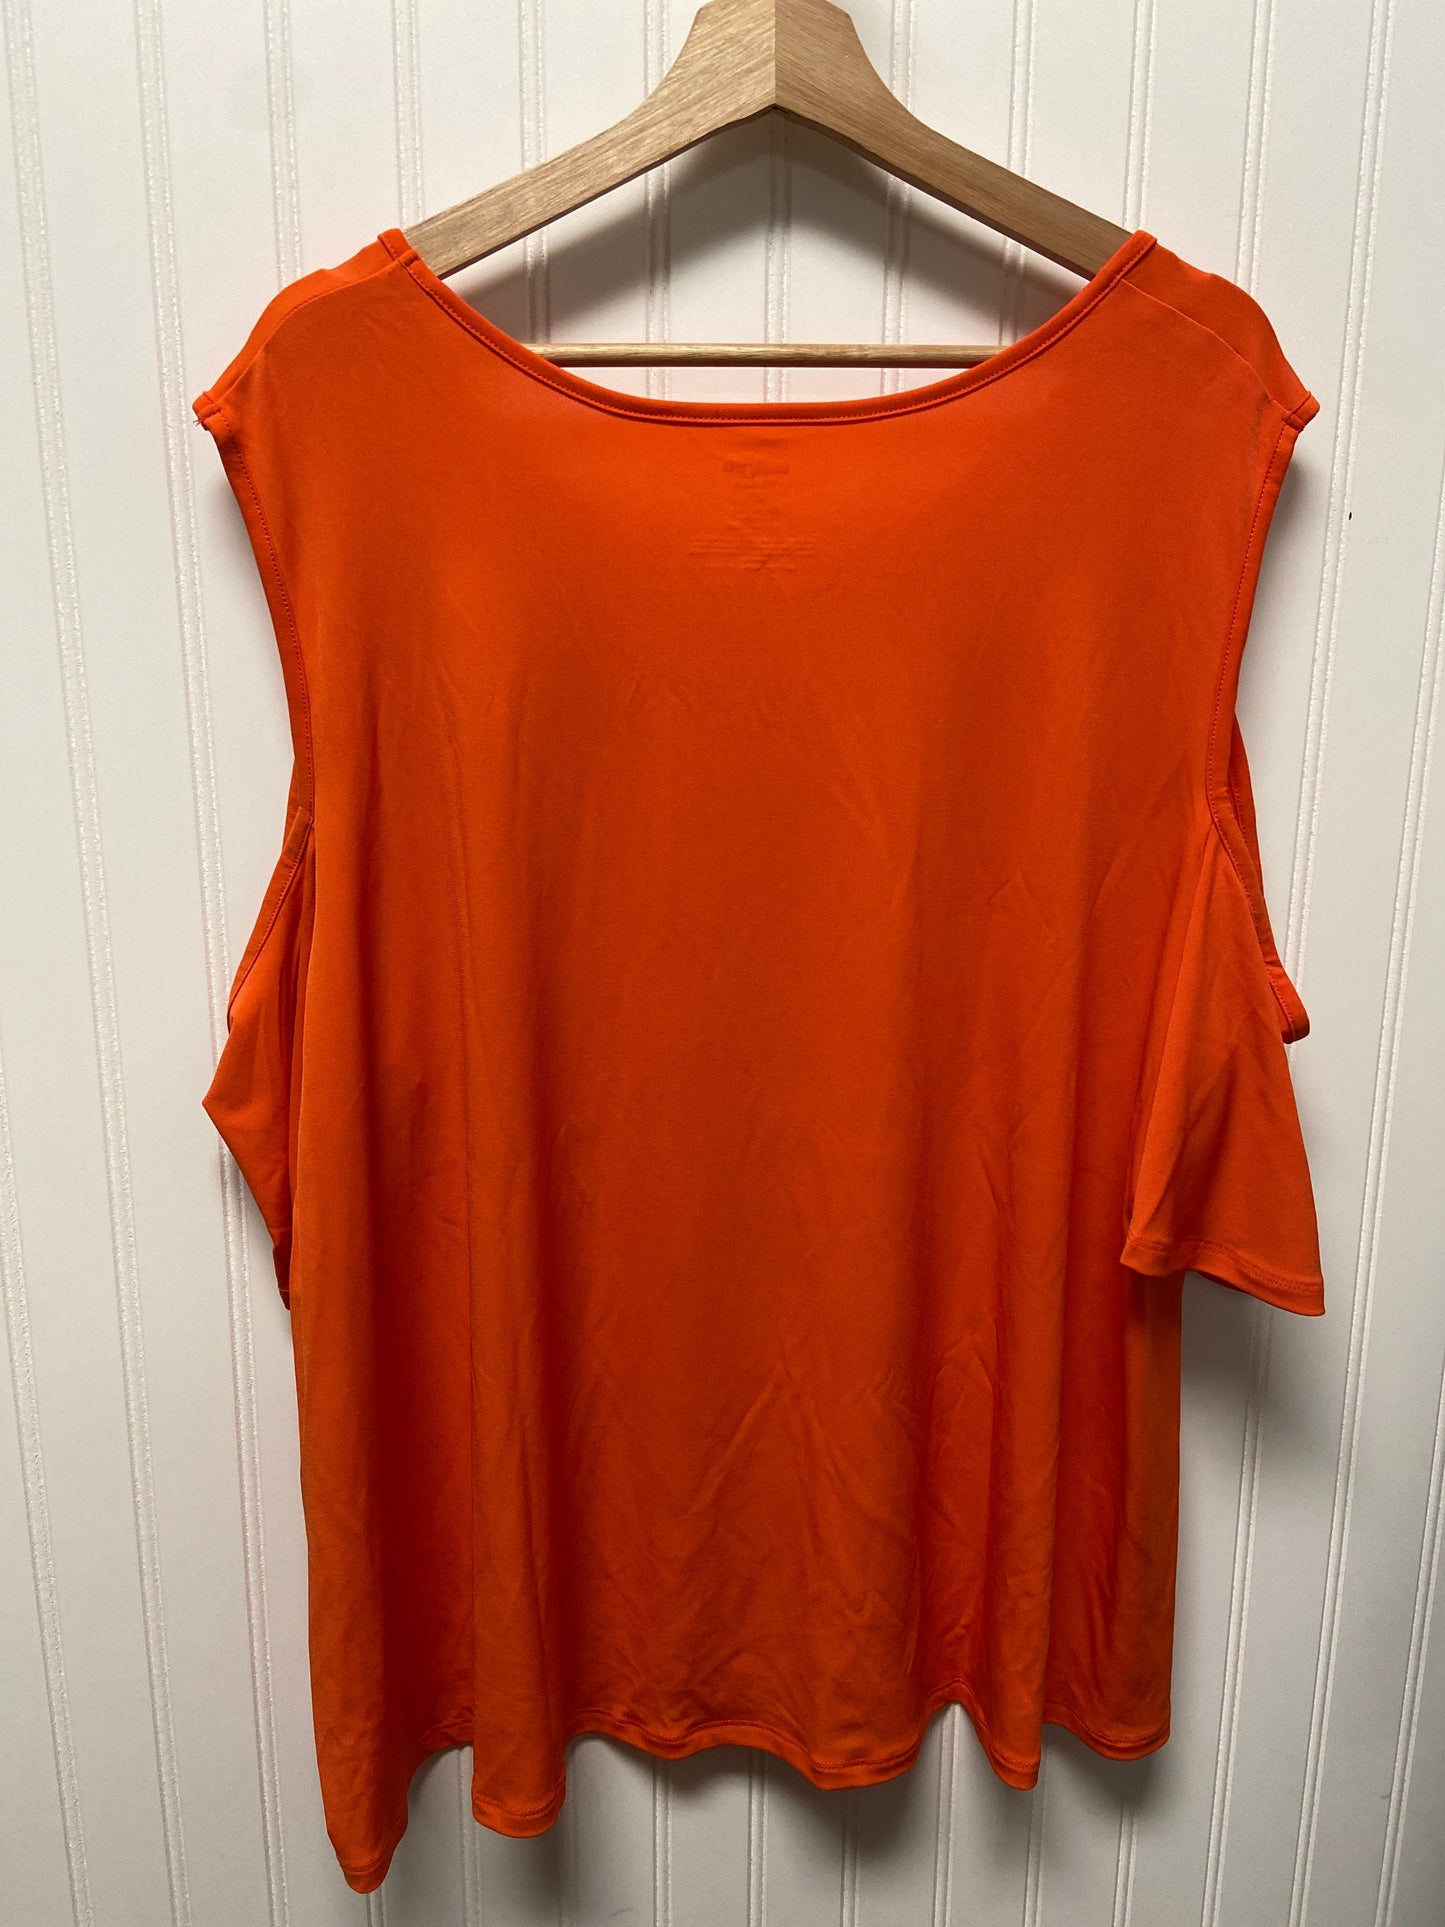 Orange Top Short Sleeve East 5th, Size 2x